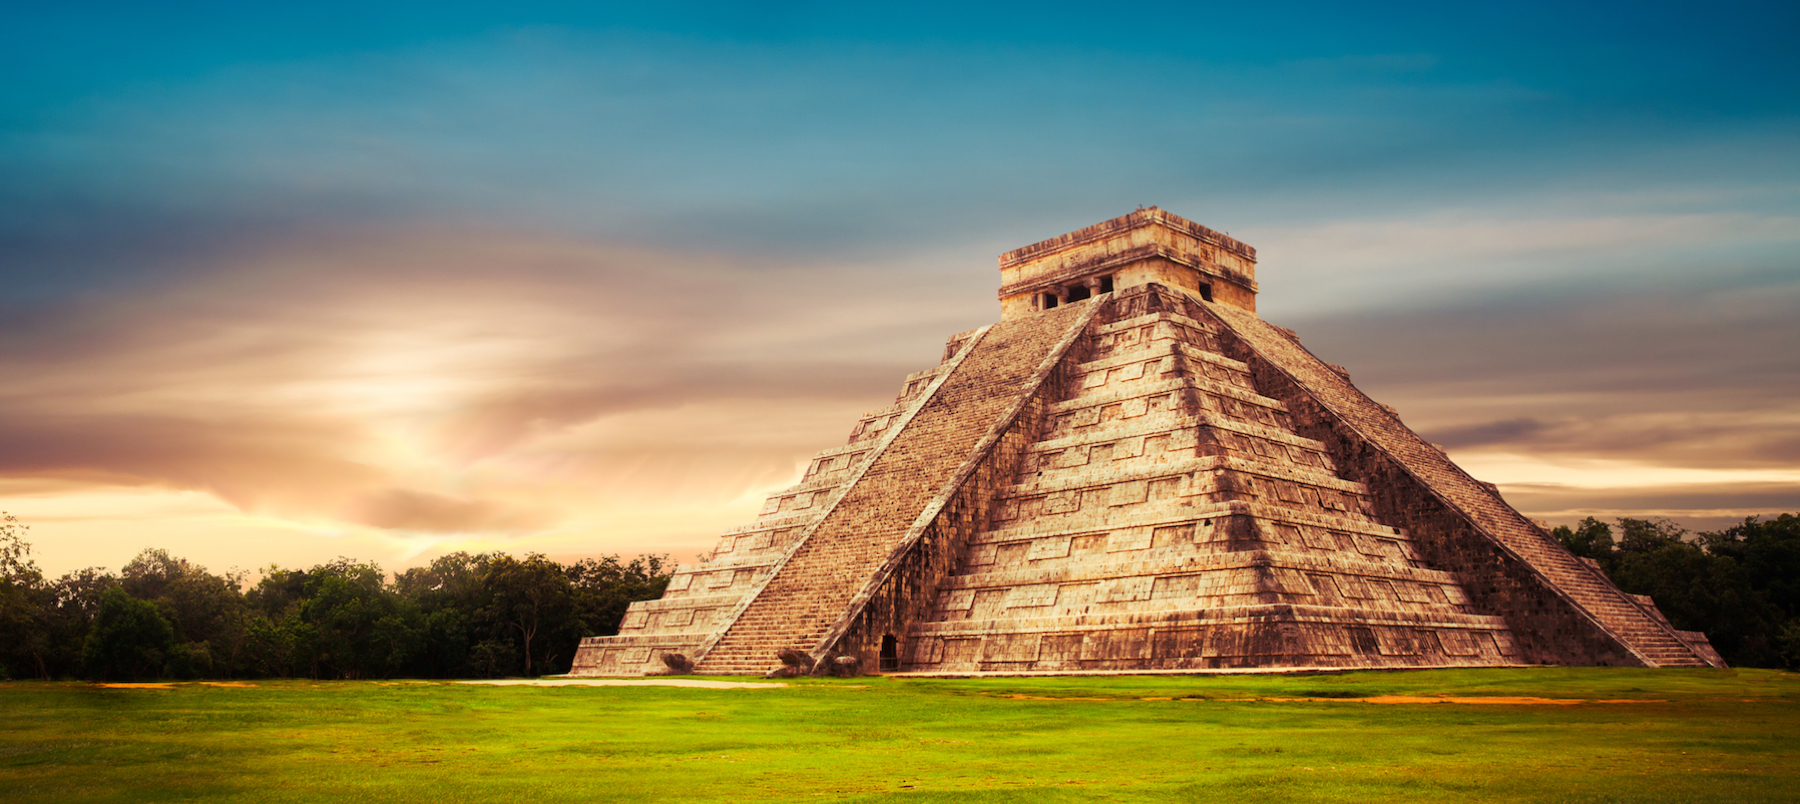 Temple of Kukulkan, pyramid in Chichen Itza, Yucatan, Mexico